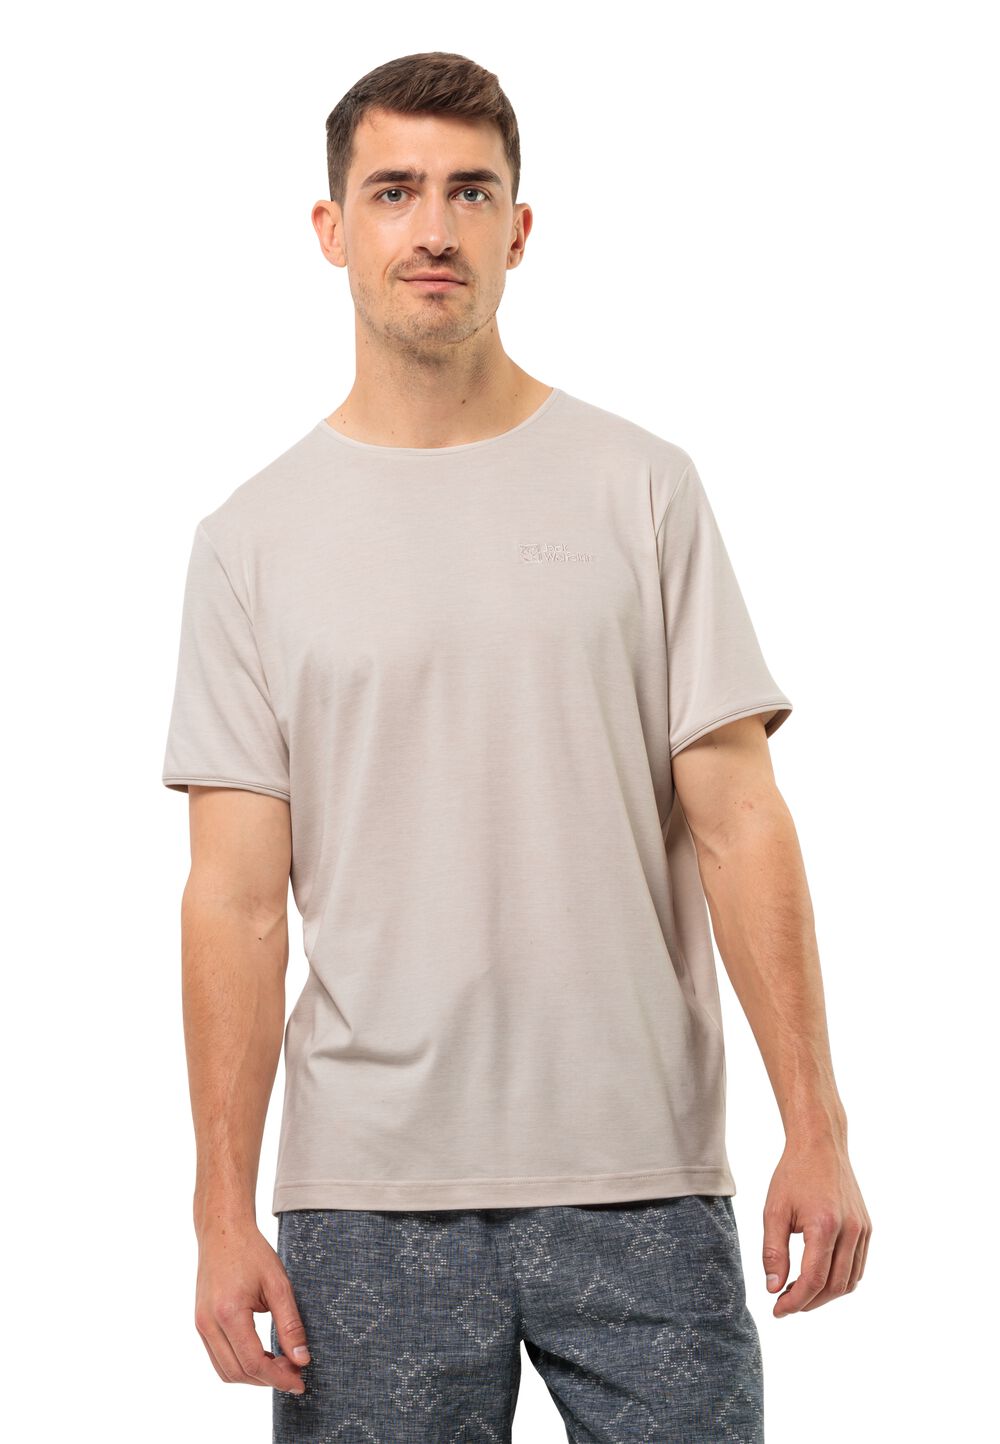 Jack Wolfskin Travel T-Shirt Men Functioneel shirt Heren M sea shell sea shell